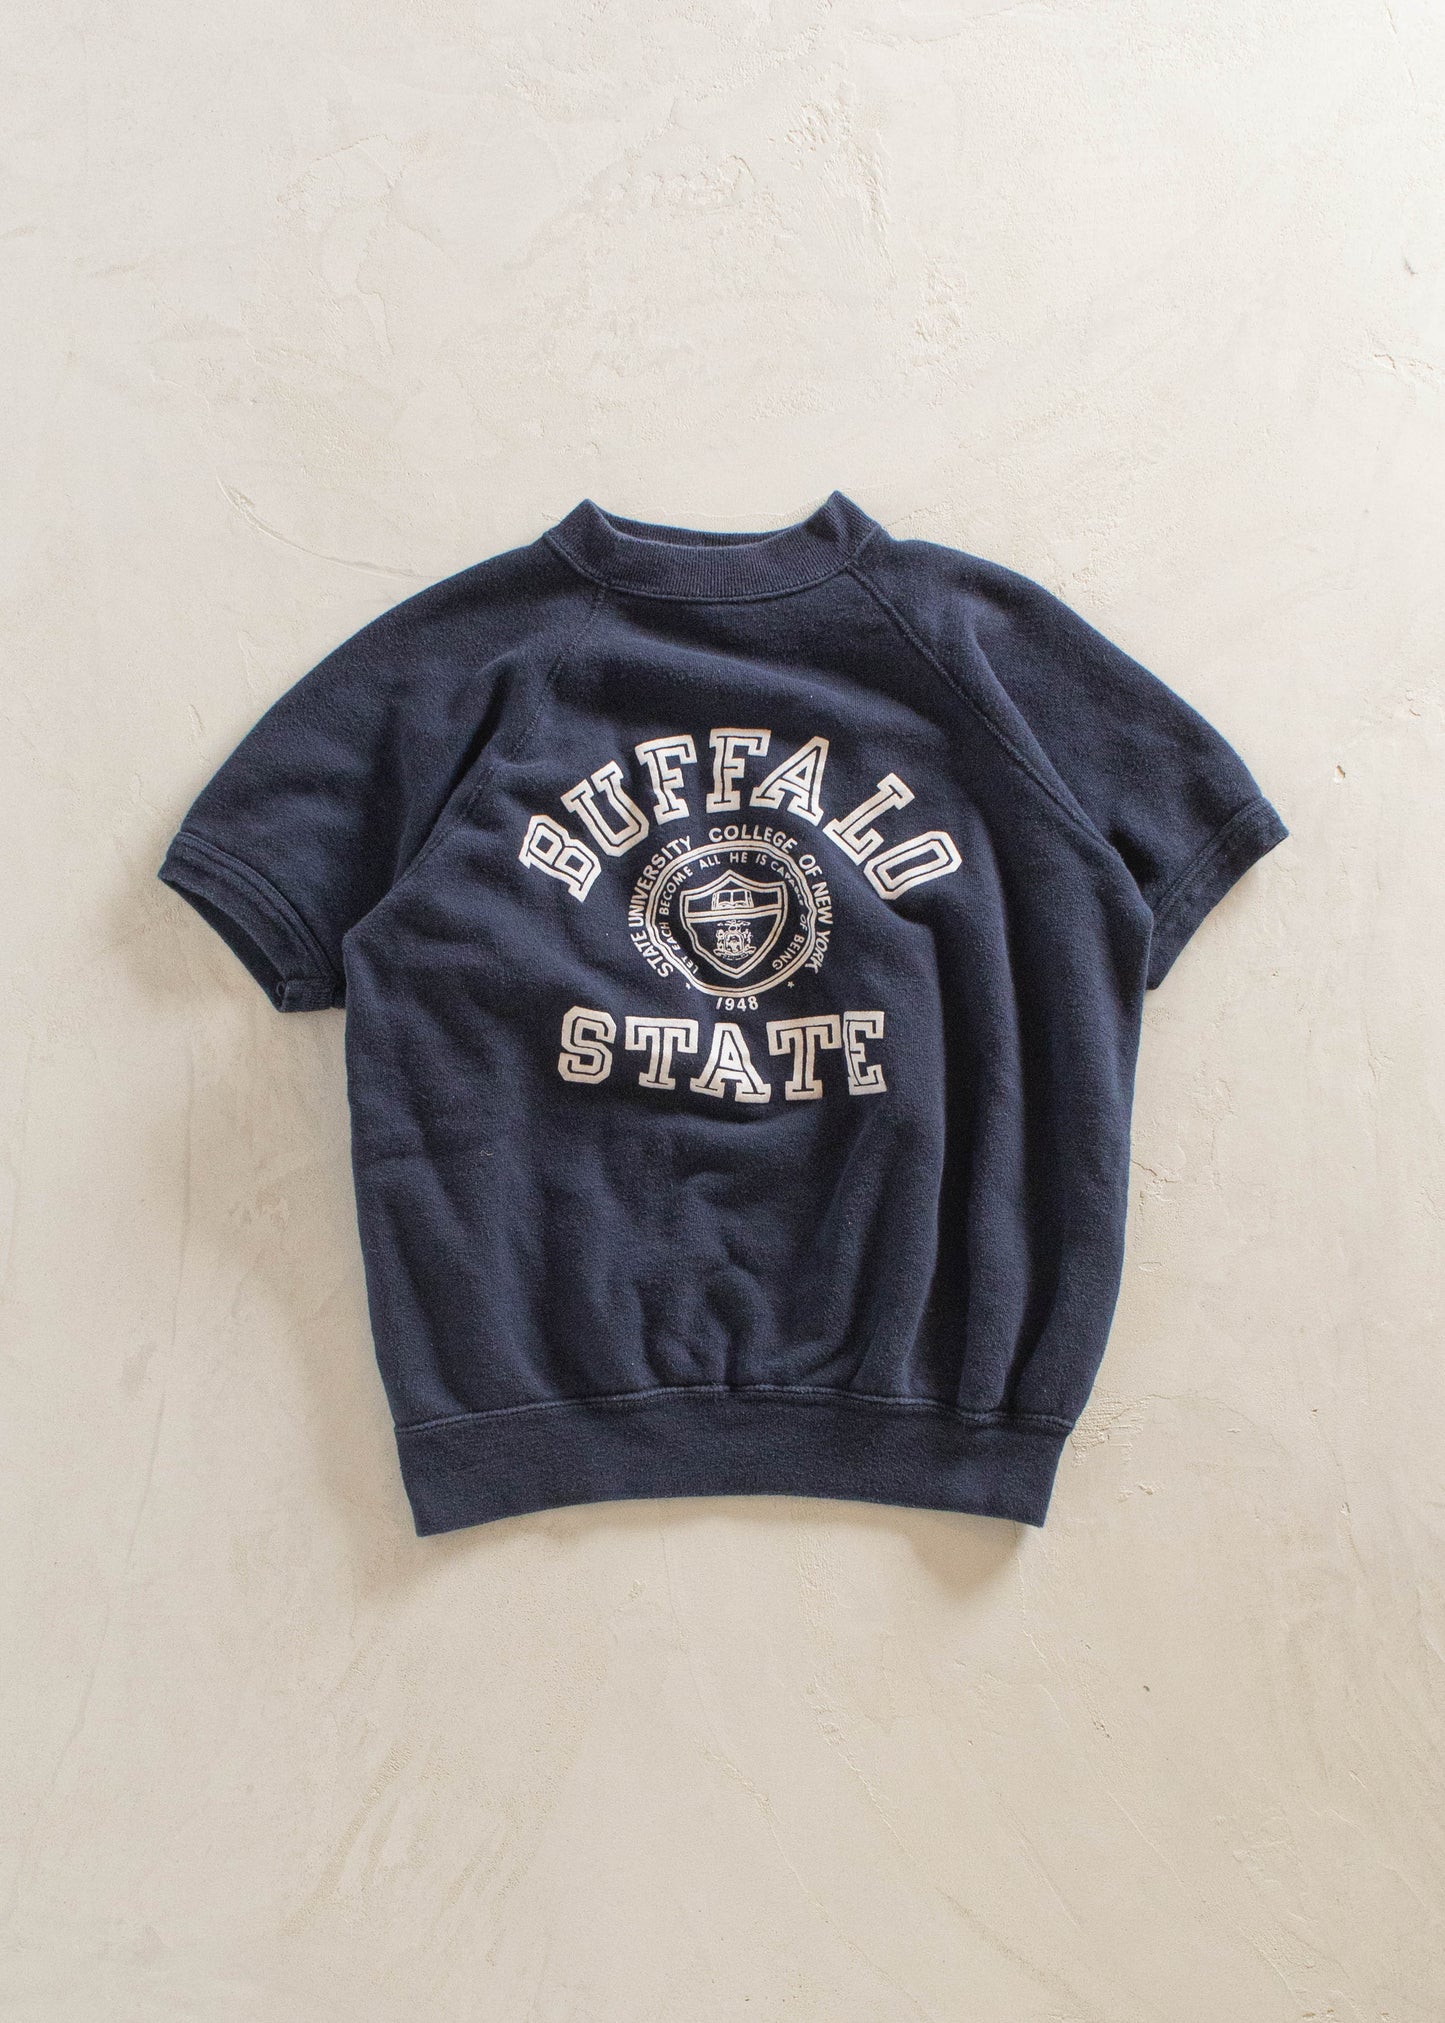 1970s Champion Blue Bar Buffalo State Short Sleeve Sweatshirt Size S/M